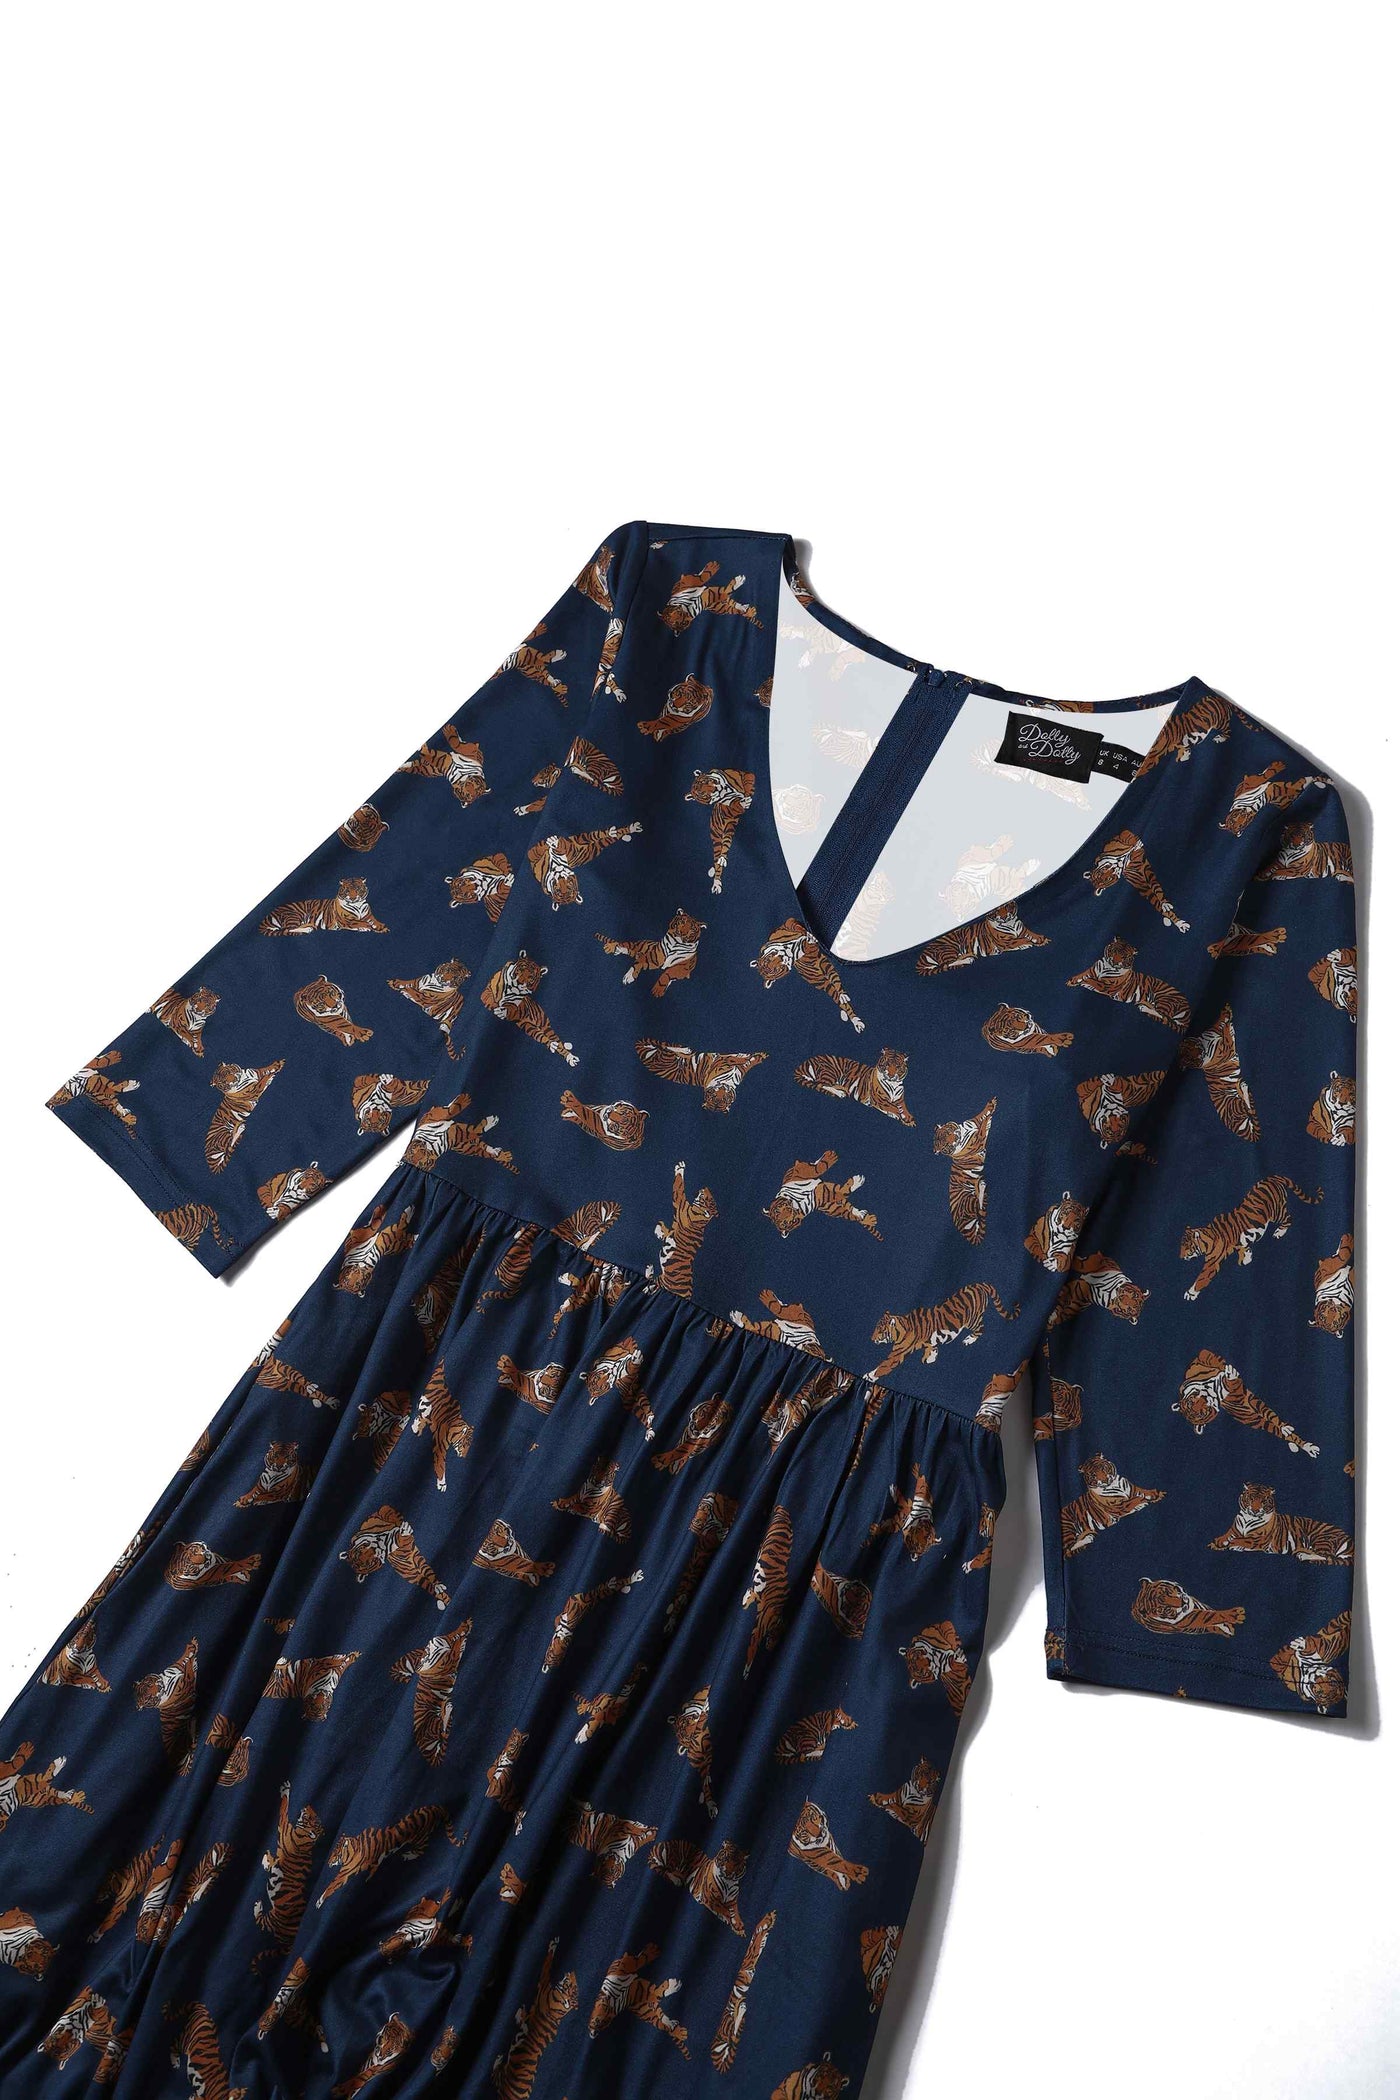 Navy Blue Tiger Print Dress